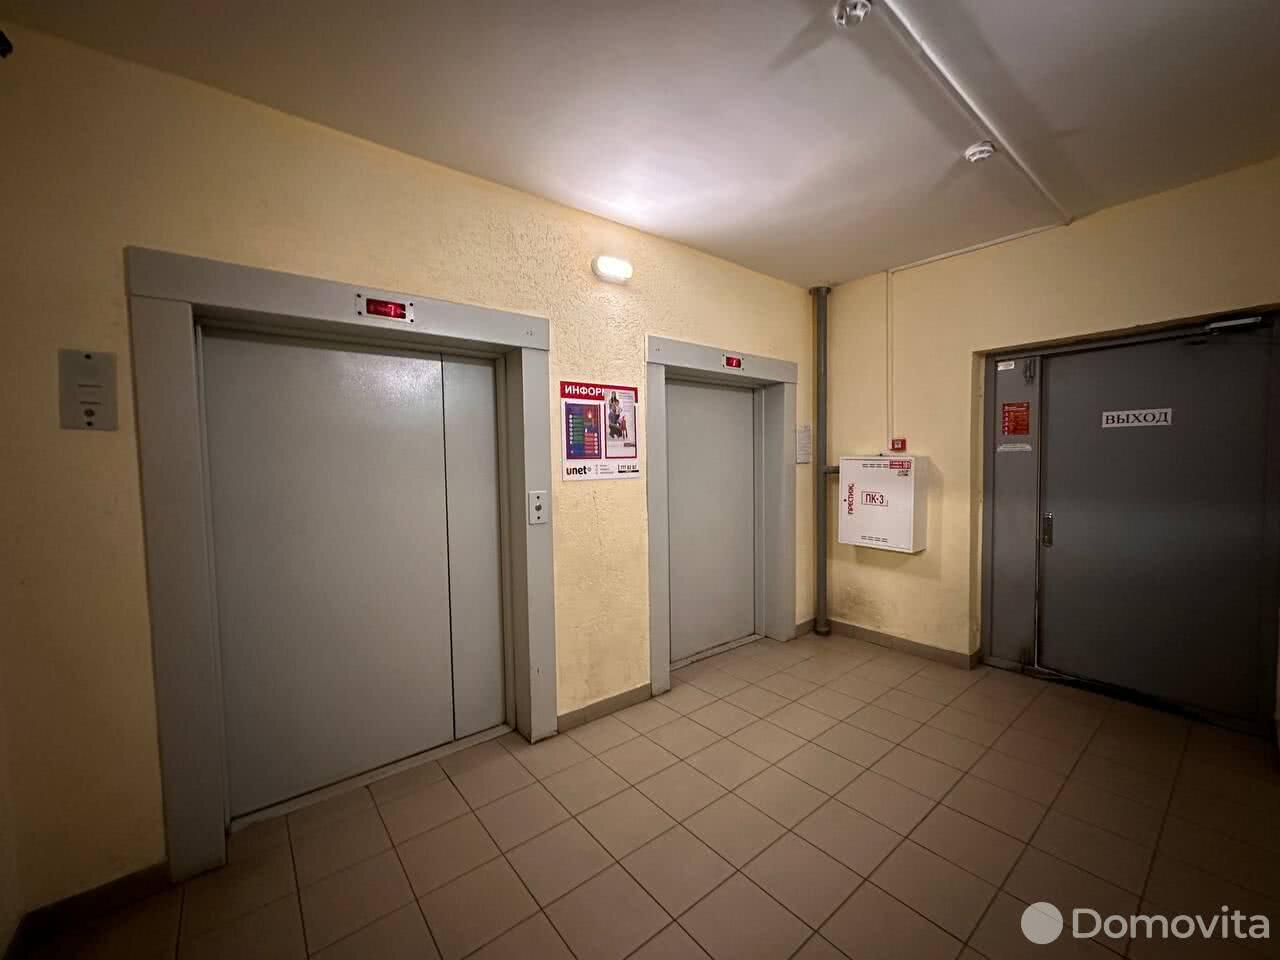 комната, Минск, ул. Рафиева, д. 54, стоимость продажи 112 525 р.